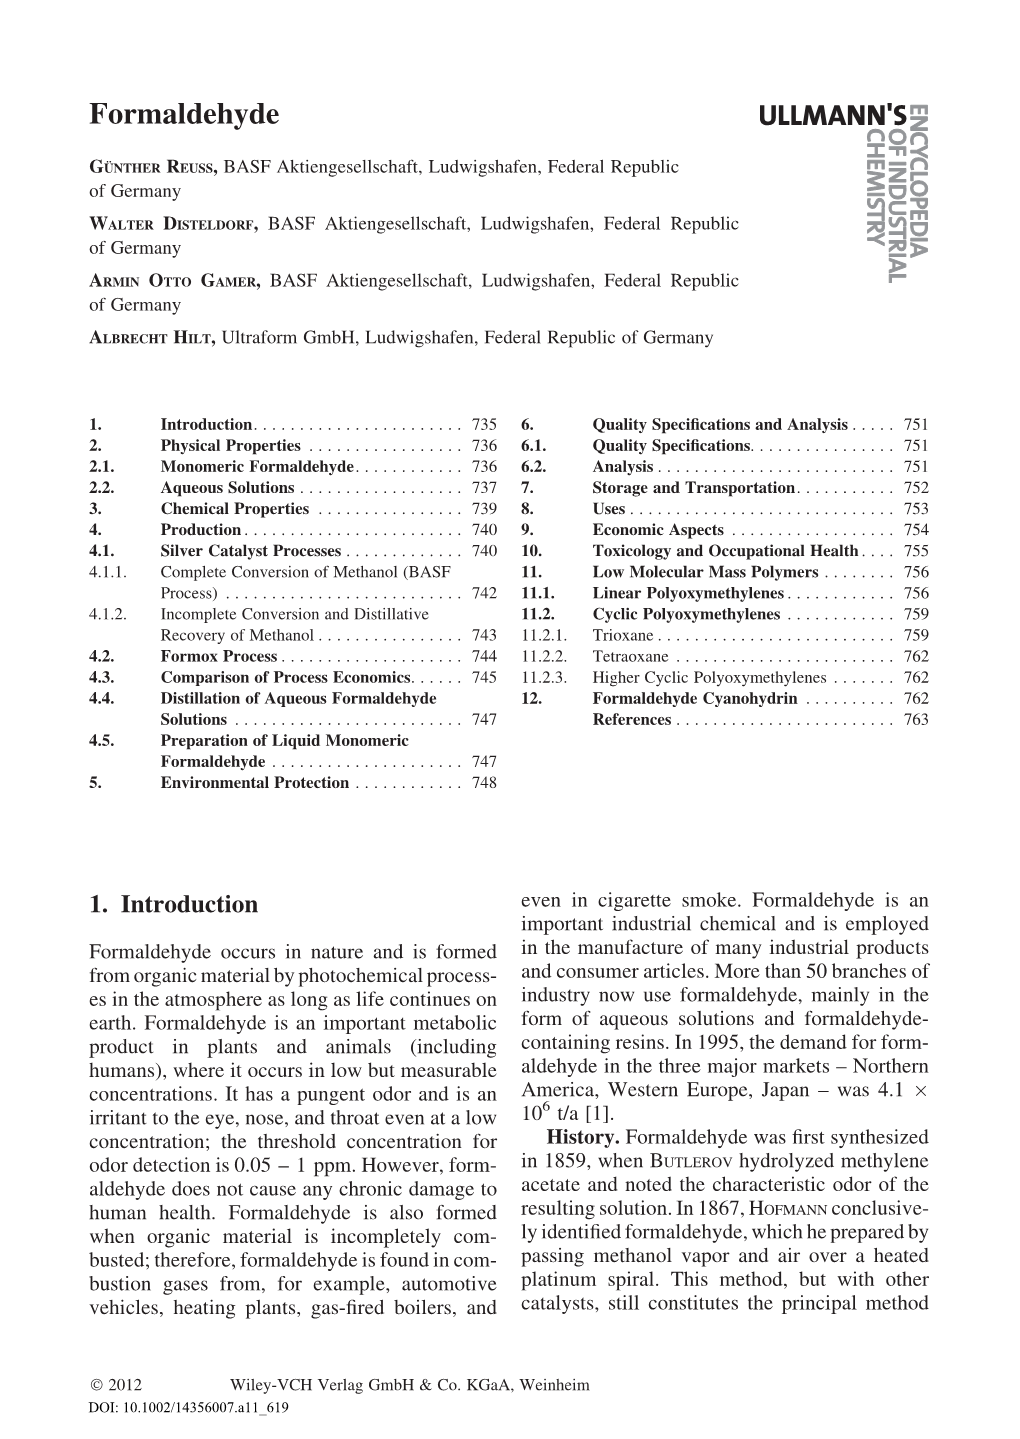 "Formaldehyde," In: Ullmann's Encyclopedia of Industrial Chemistry